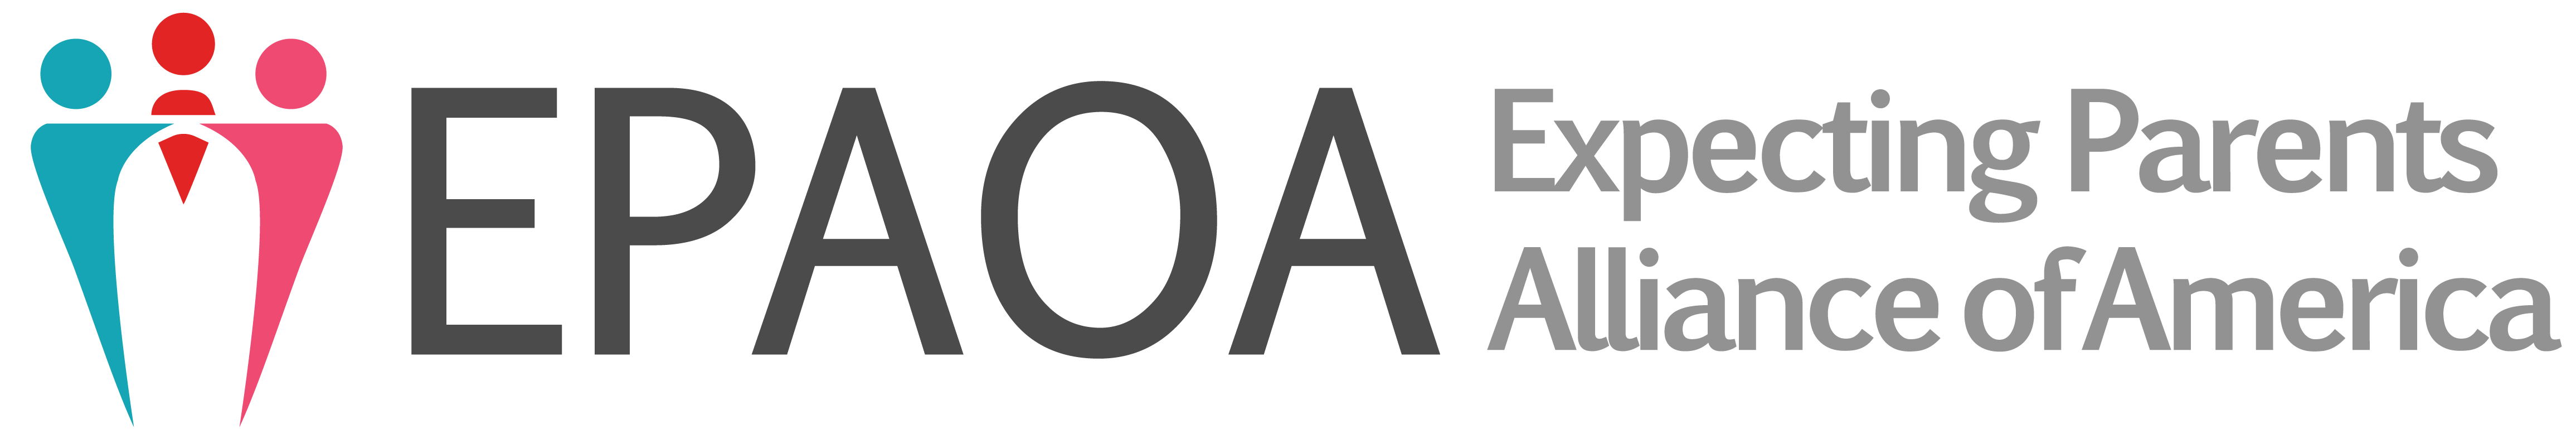 EPAOA – Expecting Parents Alliance of America Logo